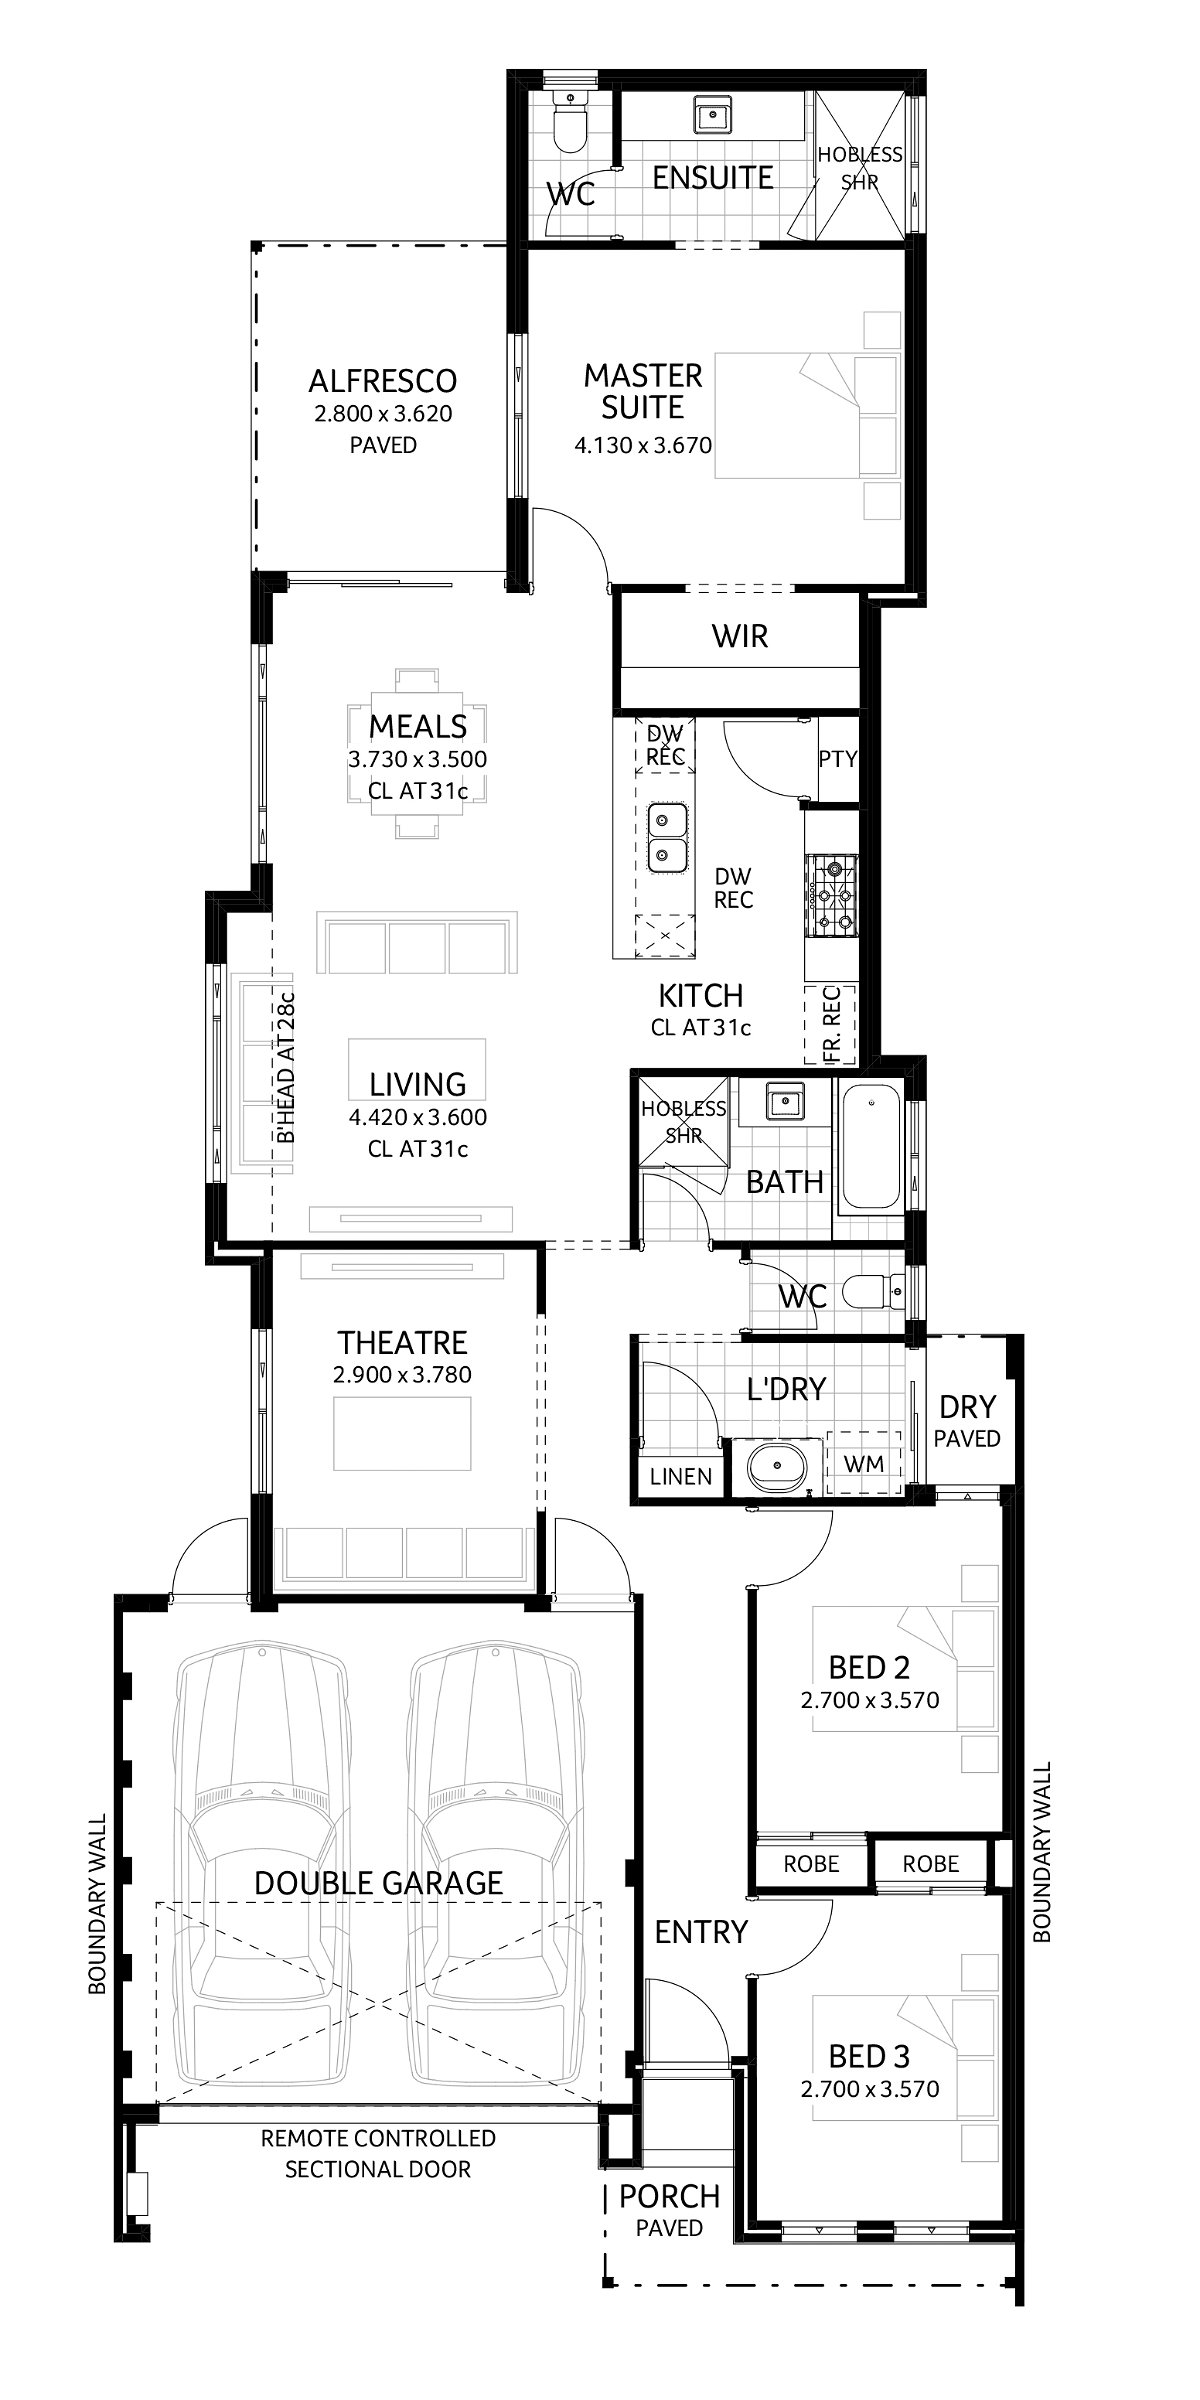 Plunkett Homes - Wright | Federation - Floorplan - Wright Luxe Federation Marketing Plan Croppedjpg